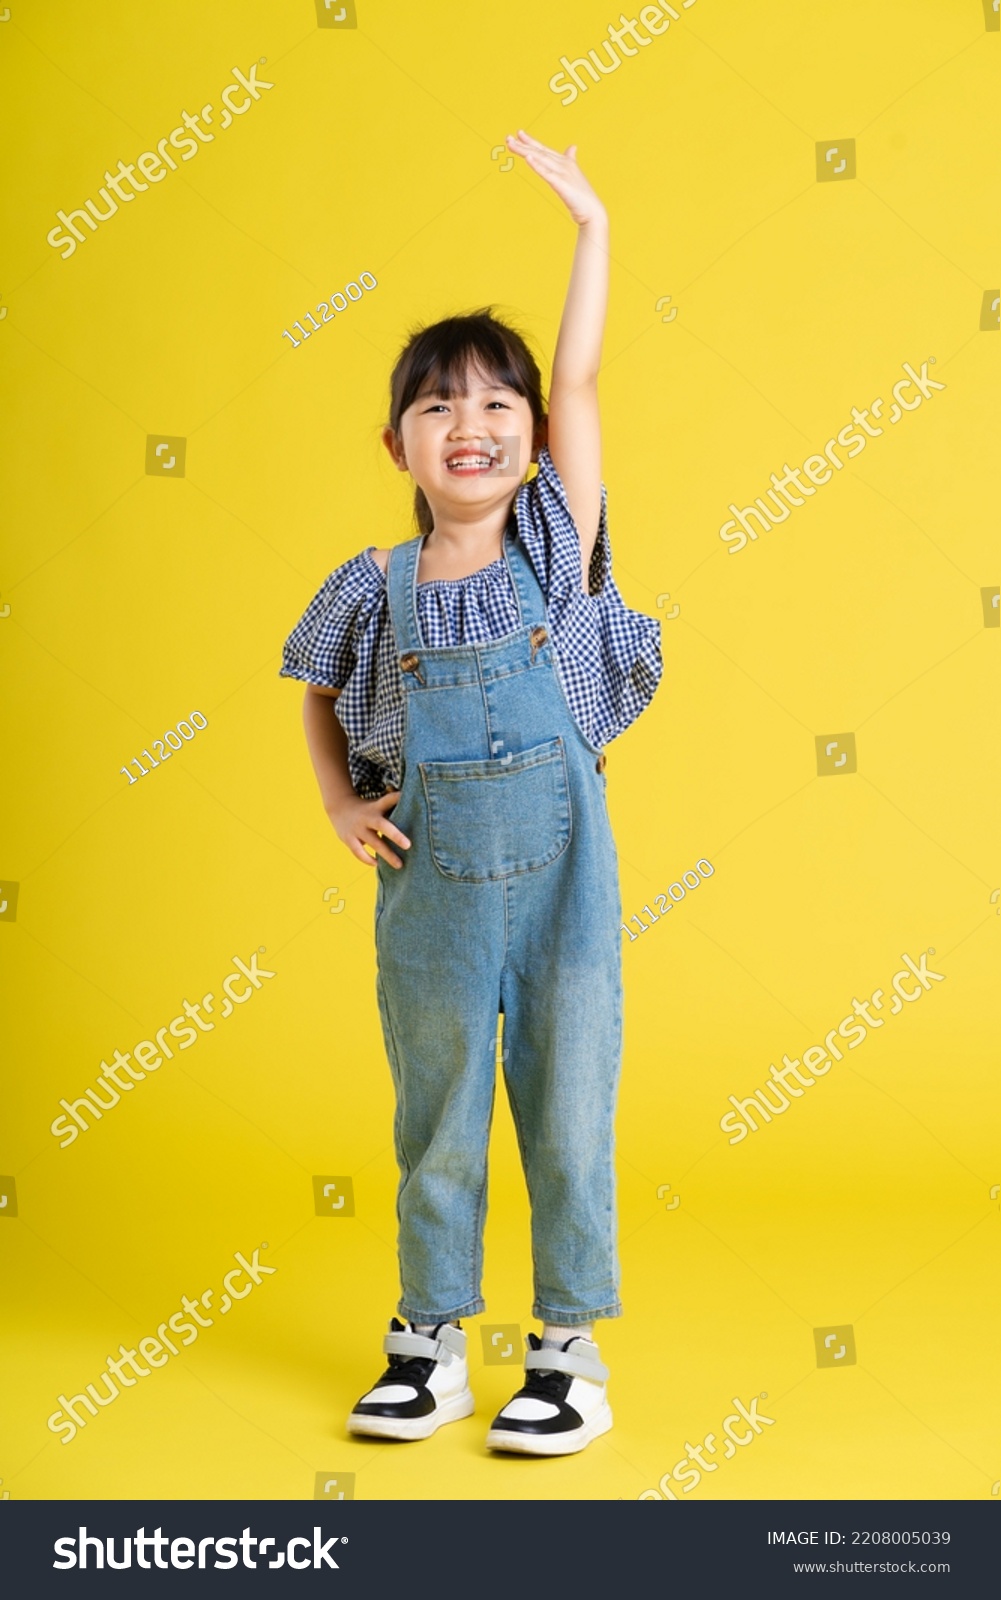 full body image of beautiful asian baby girl on yellow background #2208005039